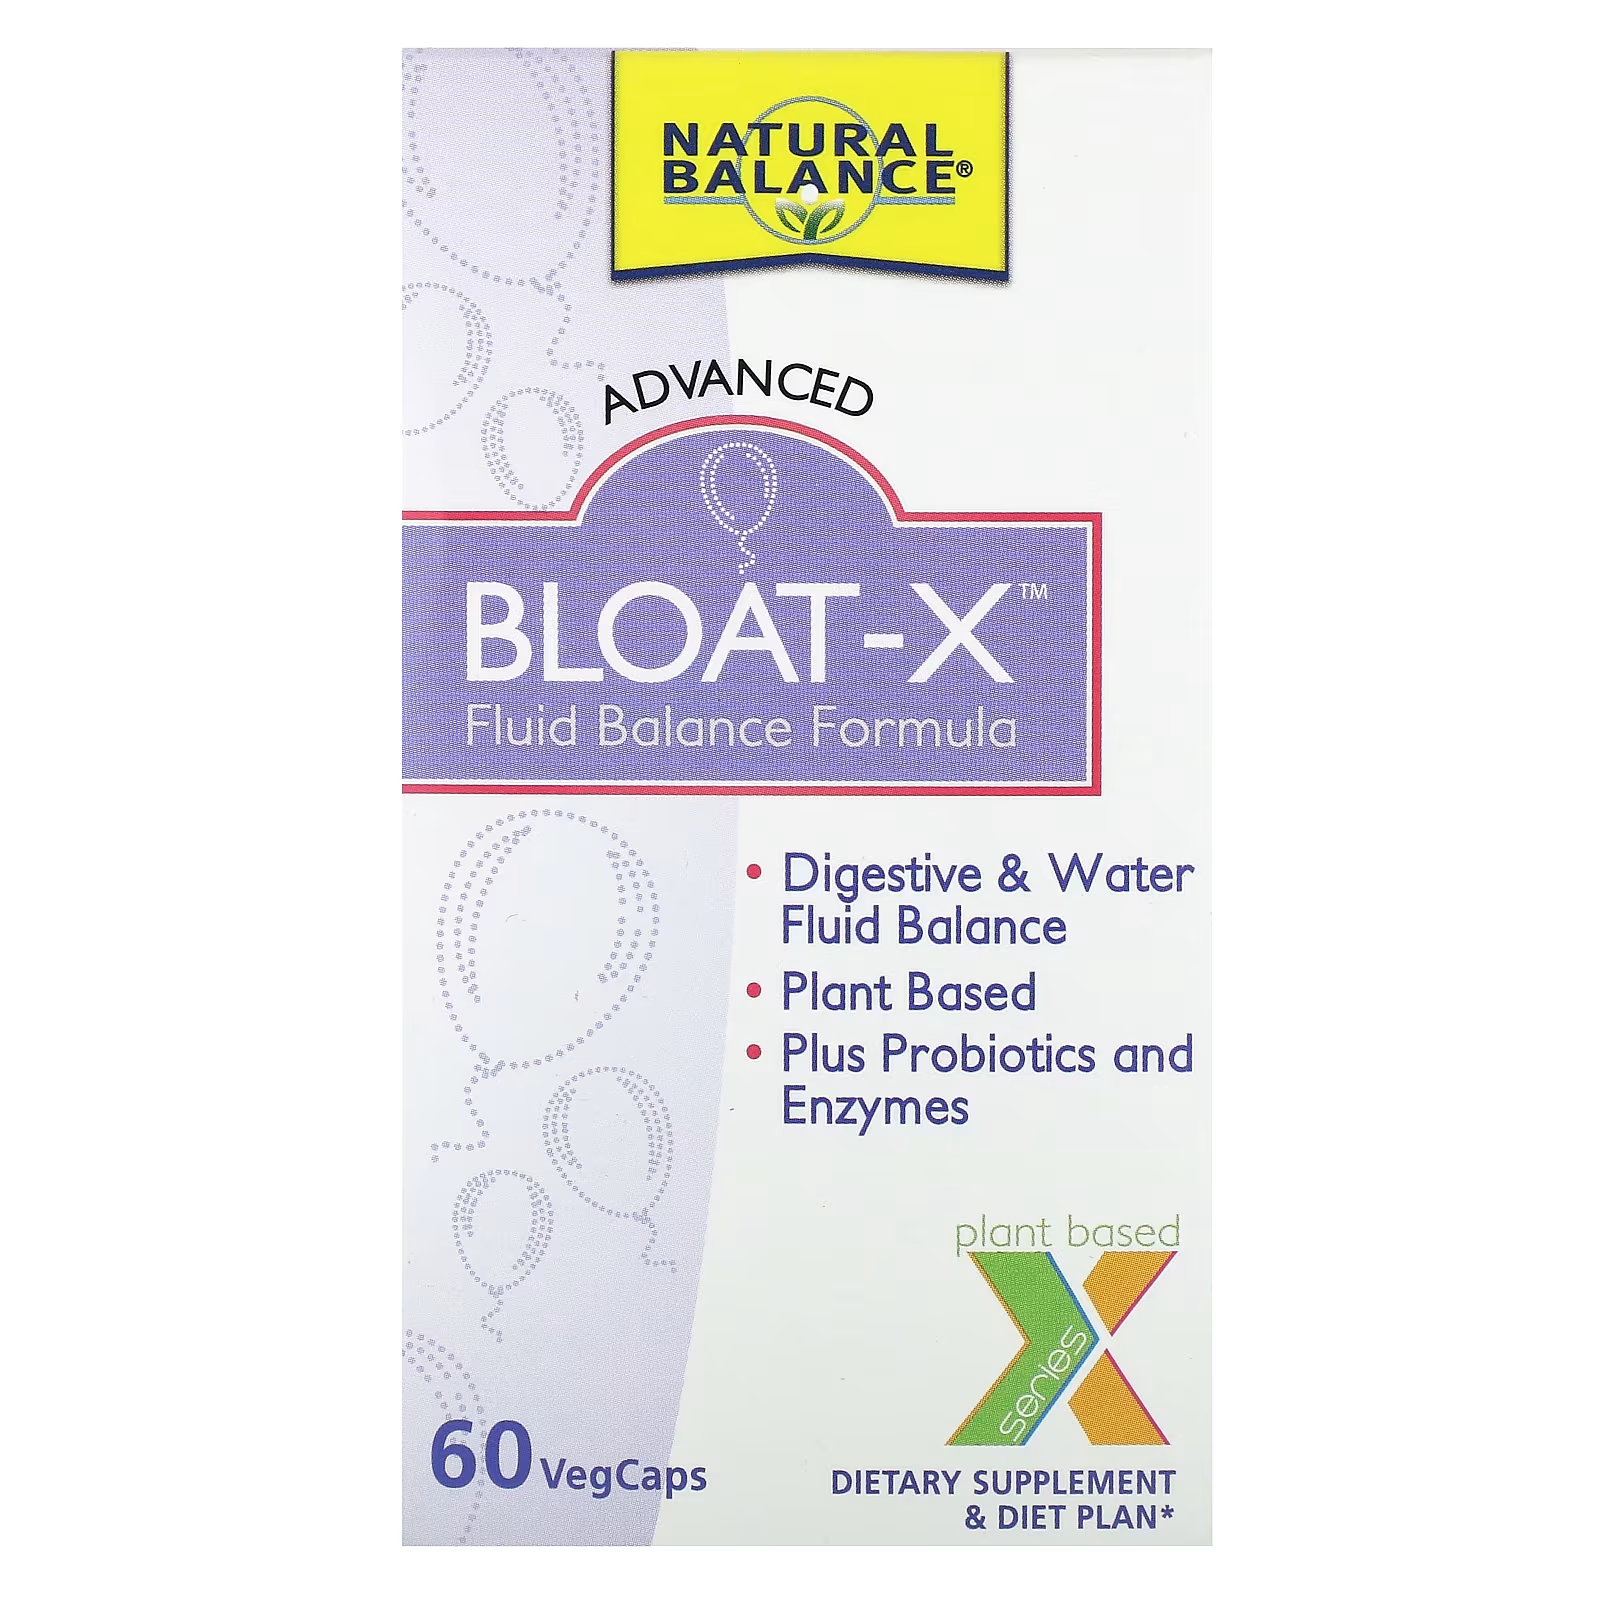 Формула баланса жидкости Natural Balance Bloat-X, 60 растительных капсул формула баланса жидкости natural balance bloat x 60 растительных капсул